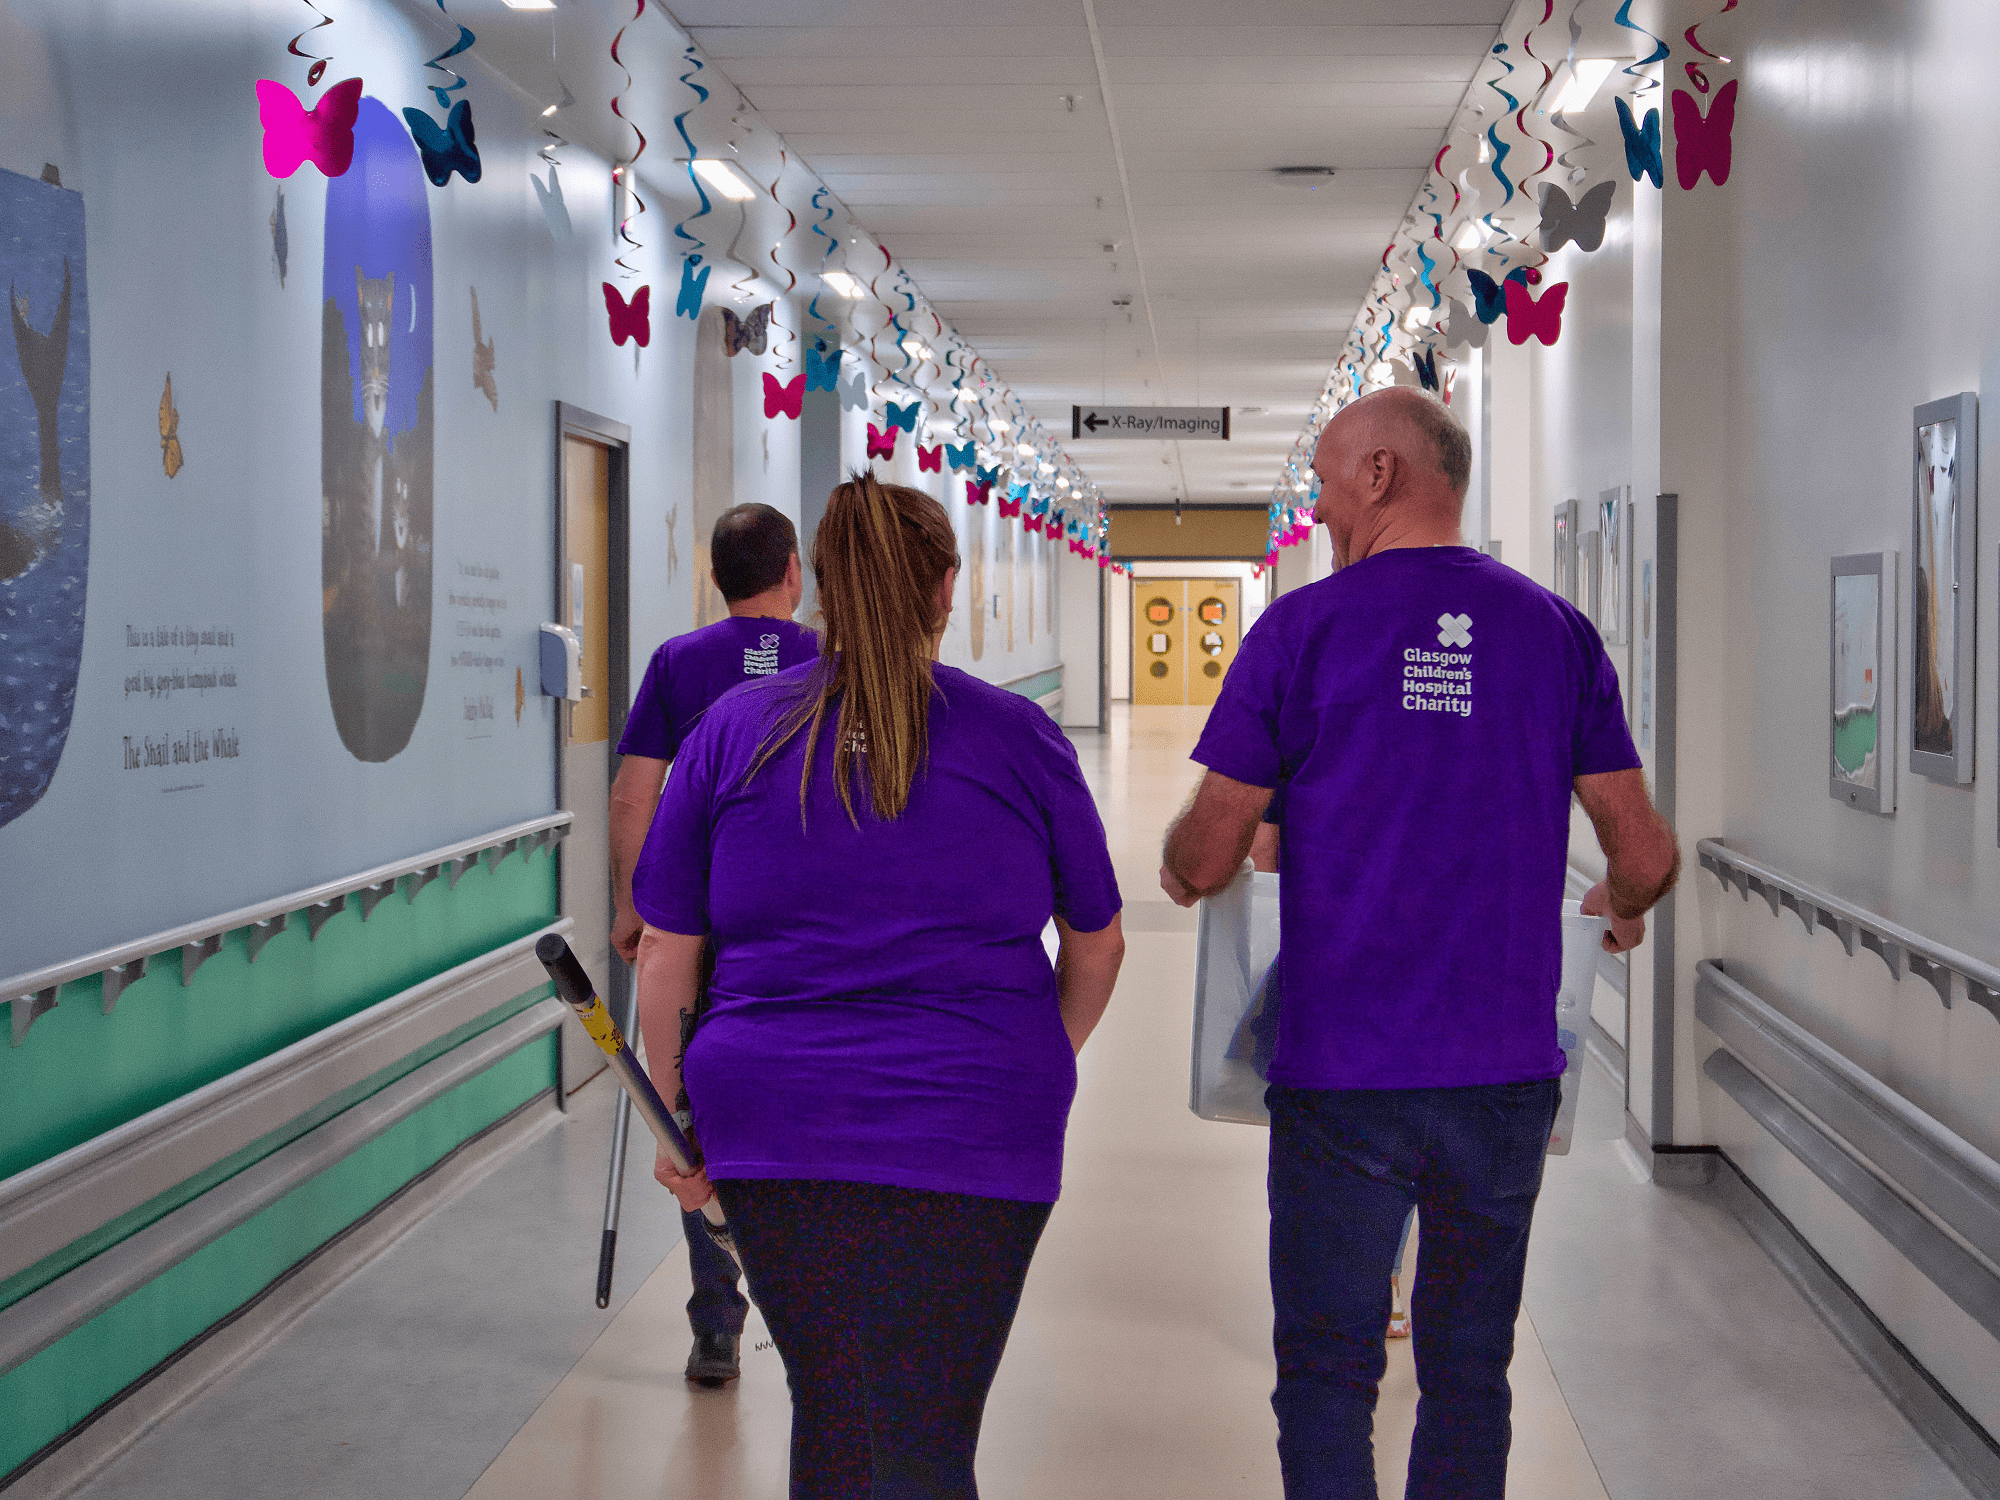 GRAHAM's fundraising efforts for Glasgow Children’s Hospital Charity supports vital work